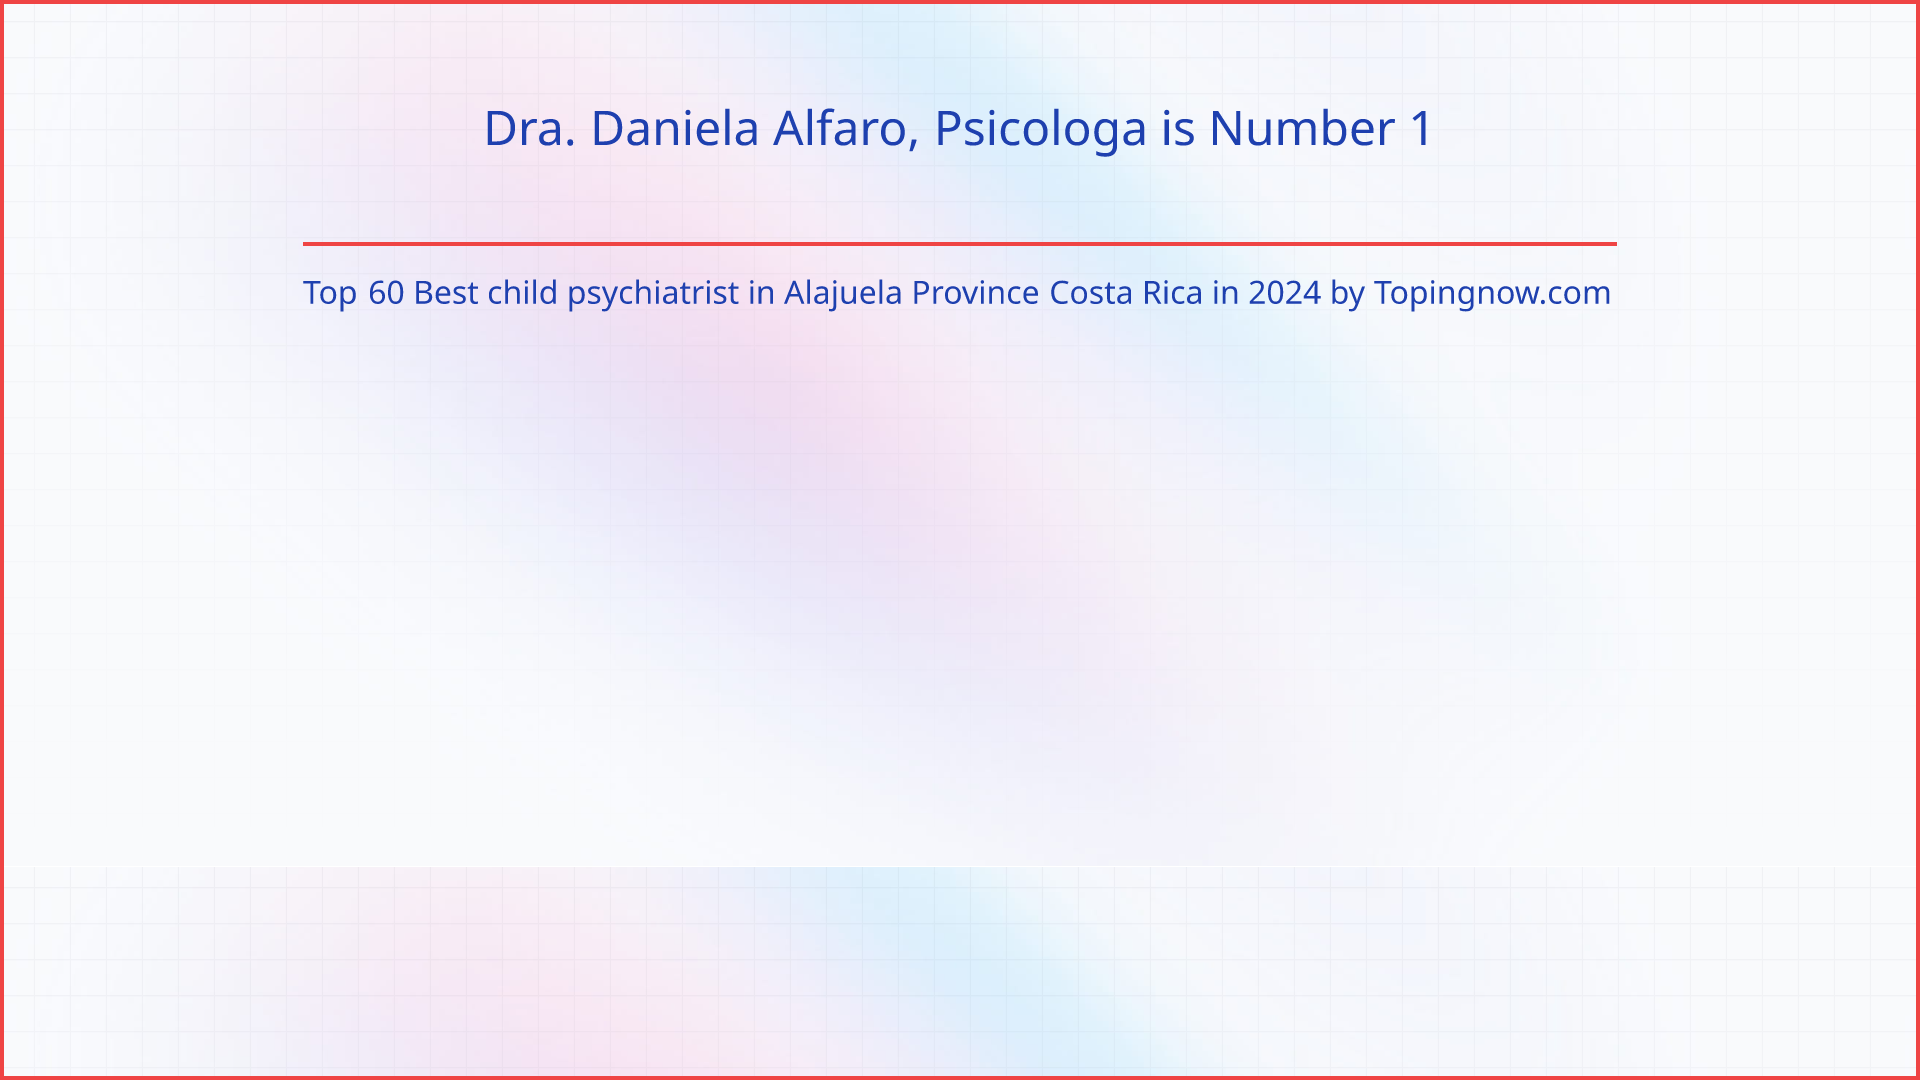 Dra. Daniela Alfaro, Psicologa: Top 60 Best child psychiatrist in Alajuela Province Costa Rica in 2024